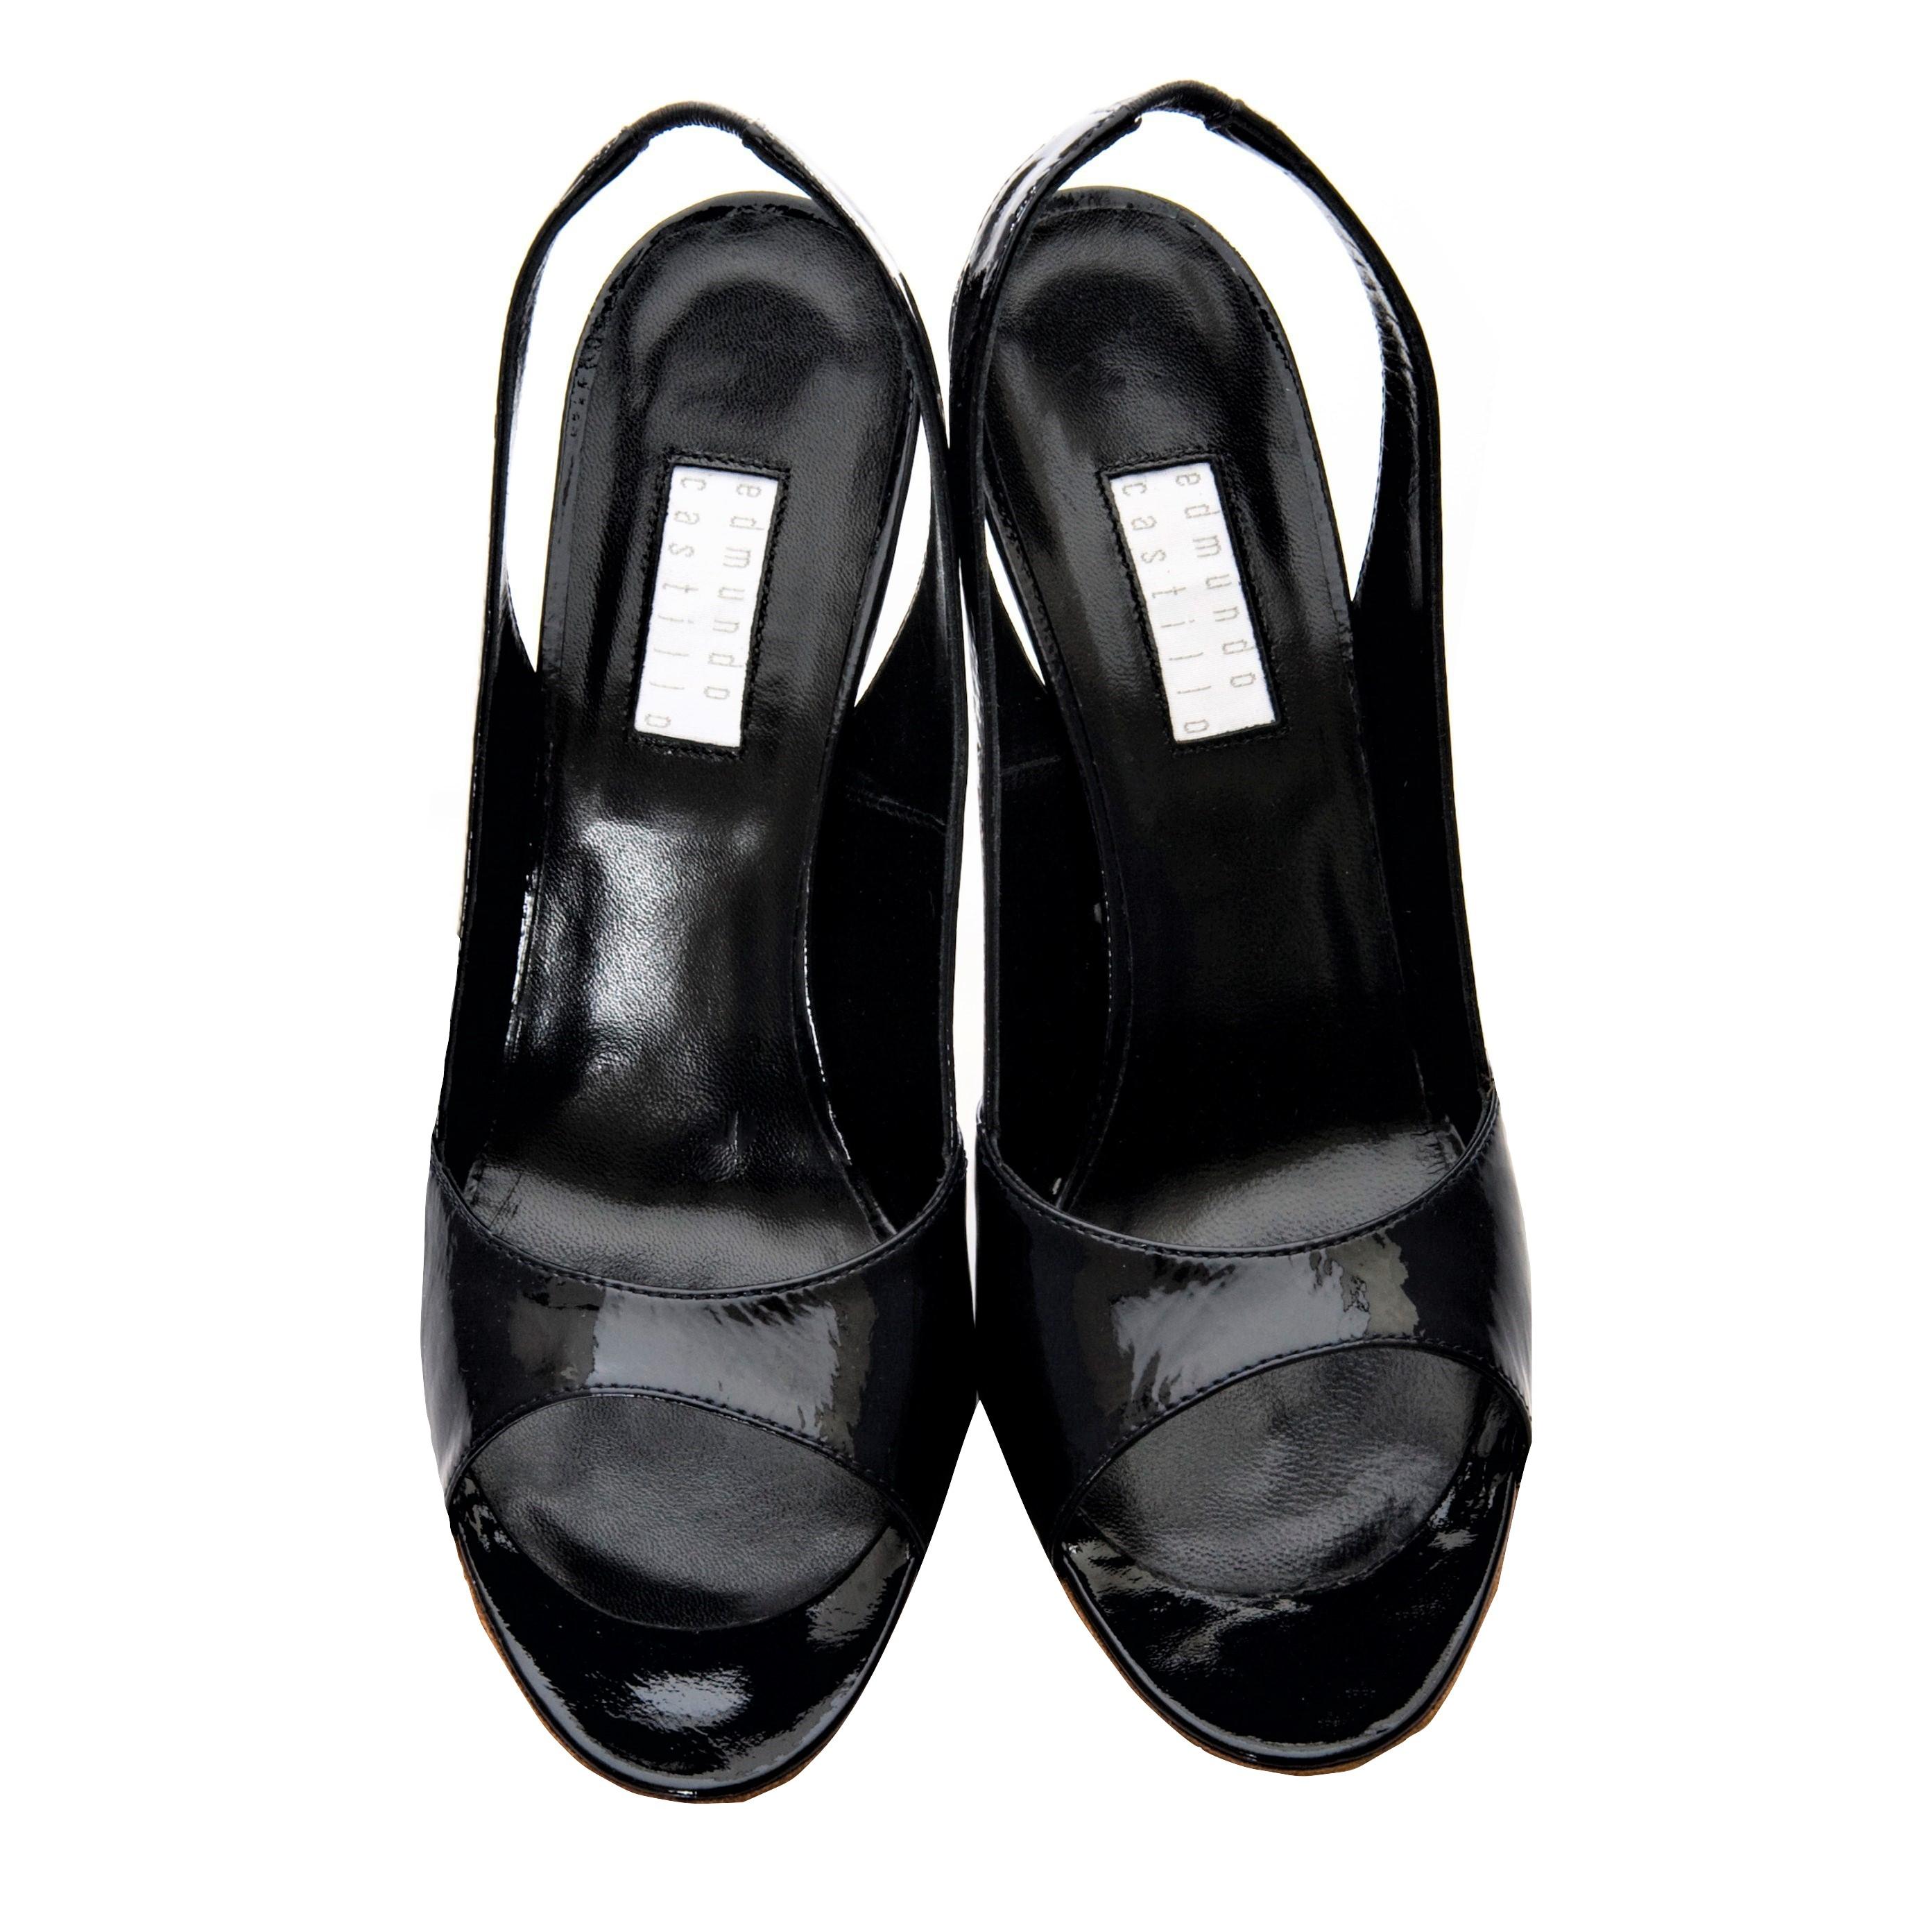 New Edmundo Castillo Black Patent Leather Sling Heels Sz 7 2